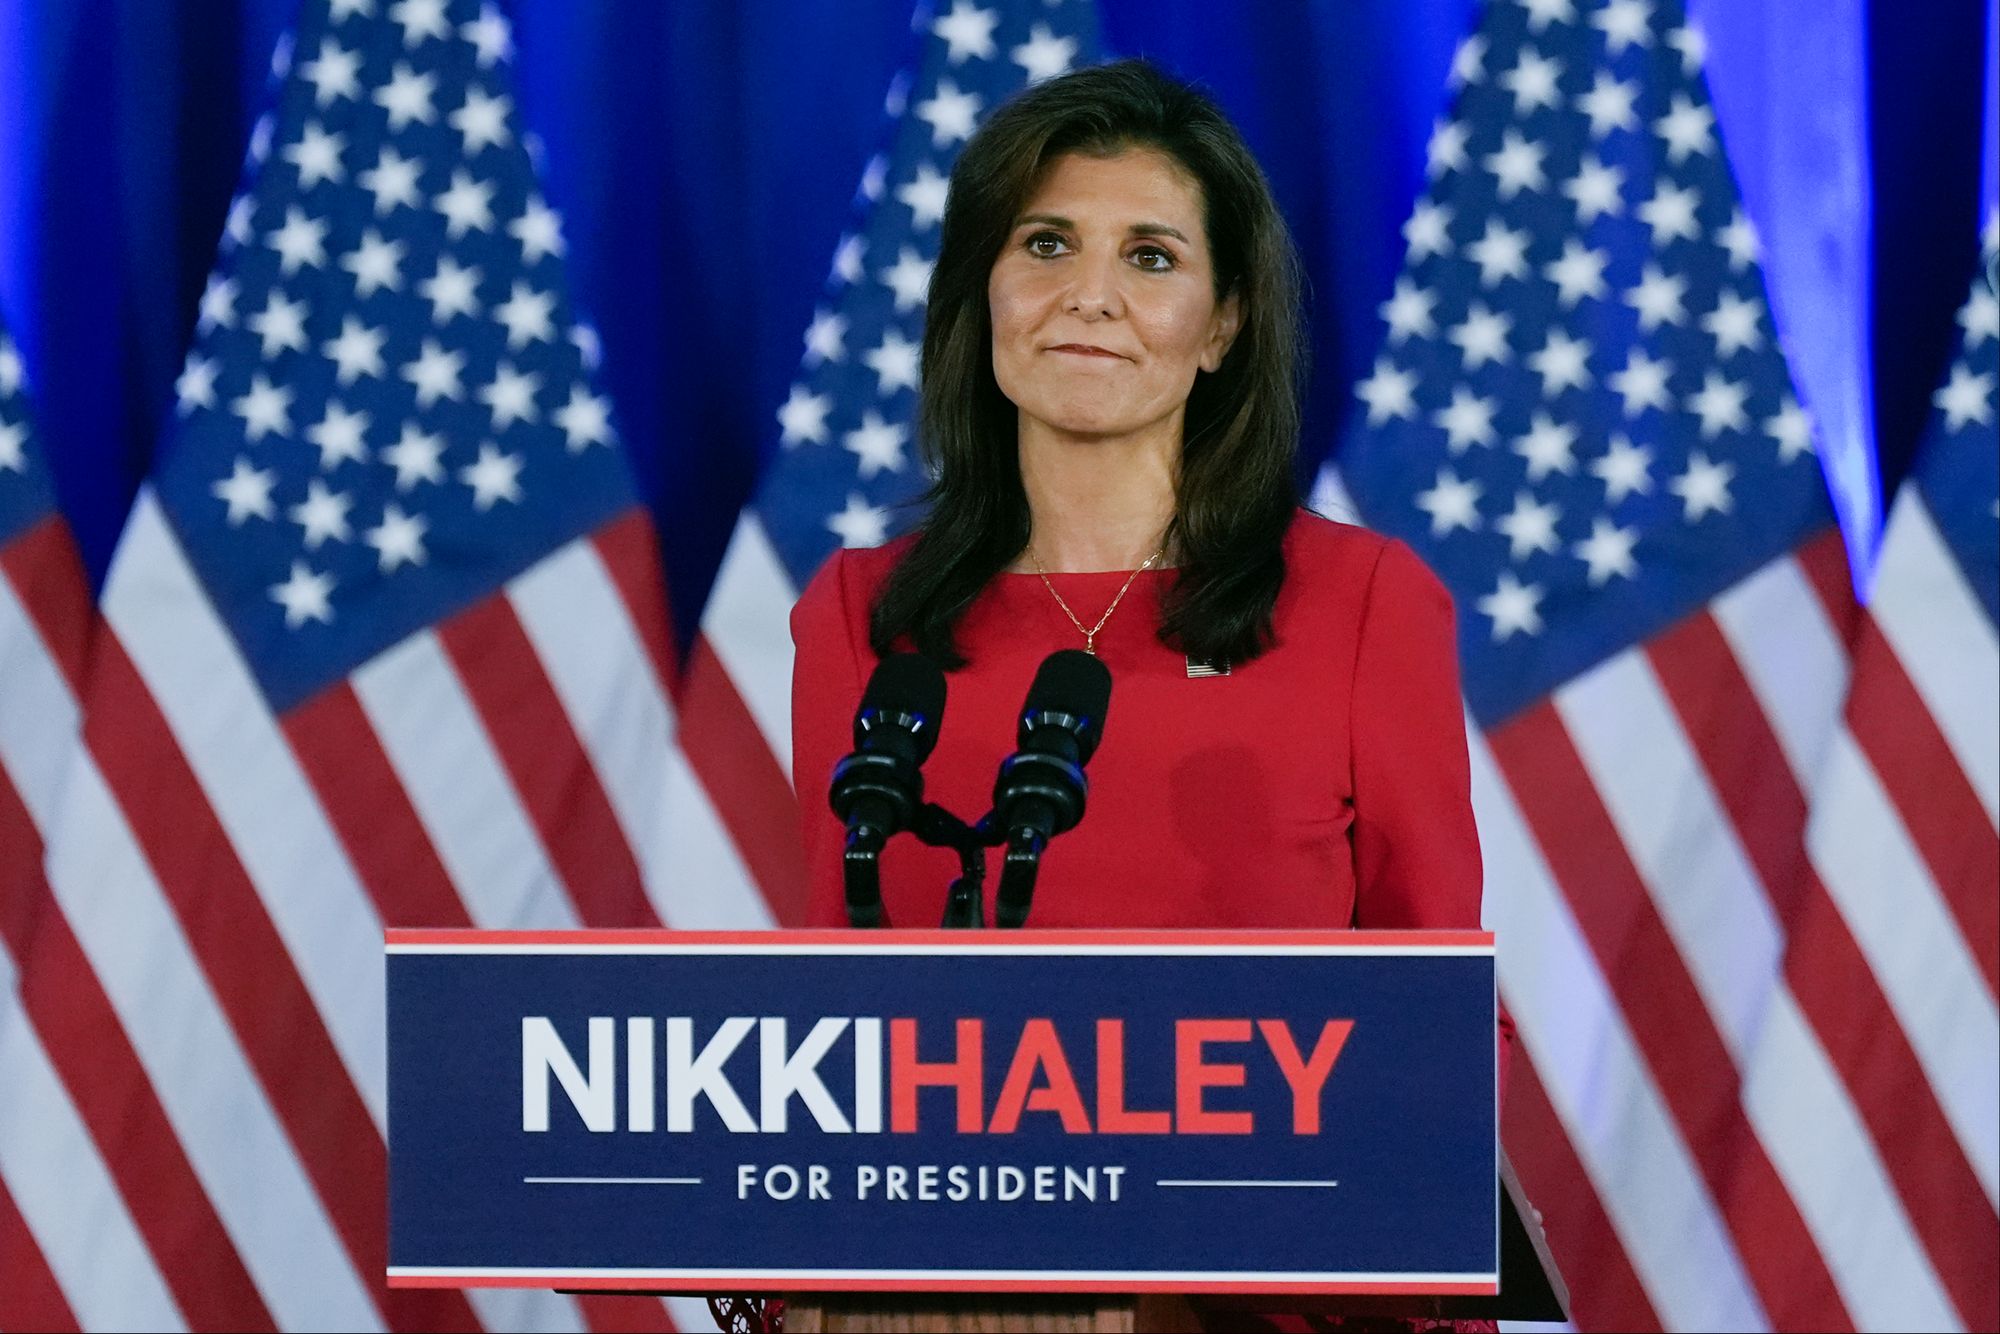 has nikki haley endorsed donald trump for president?